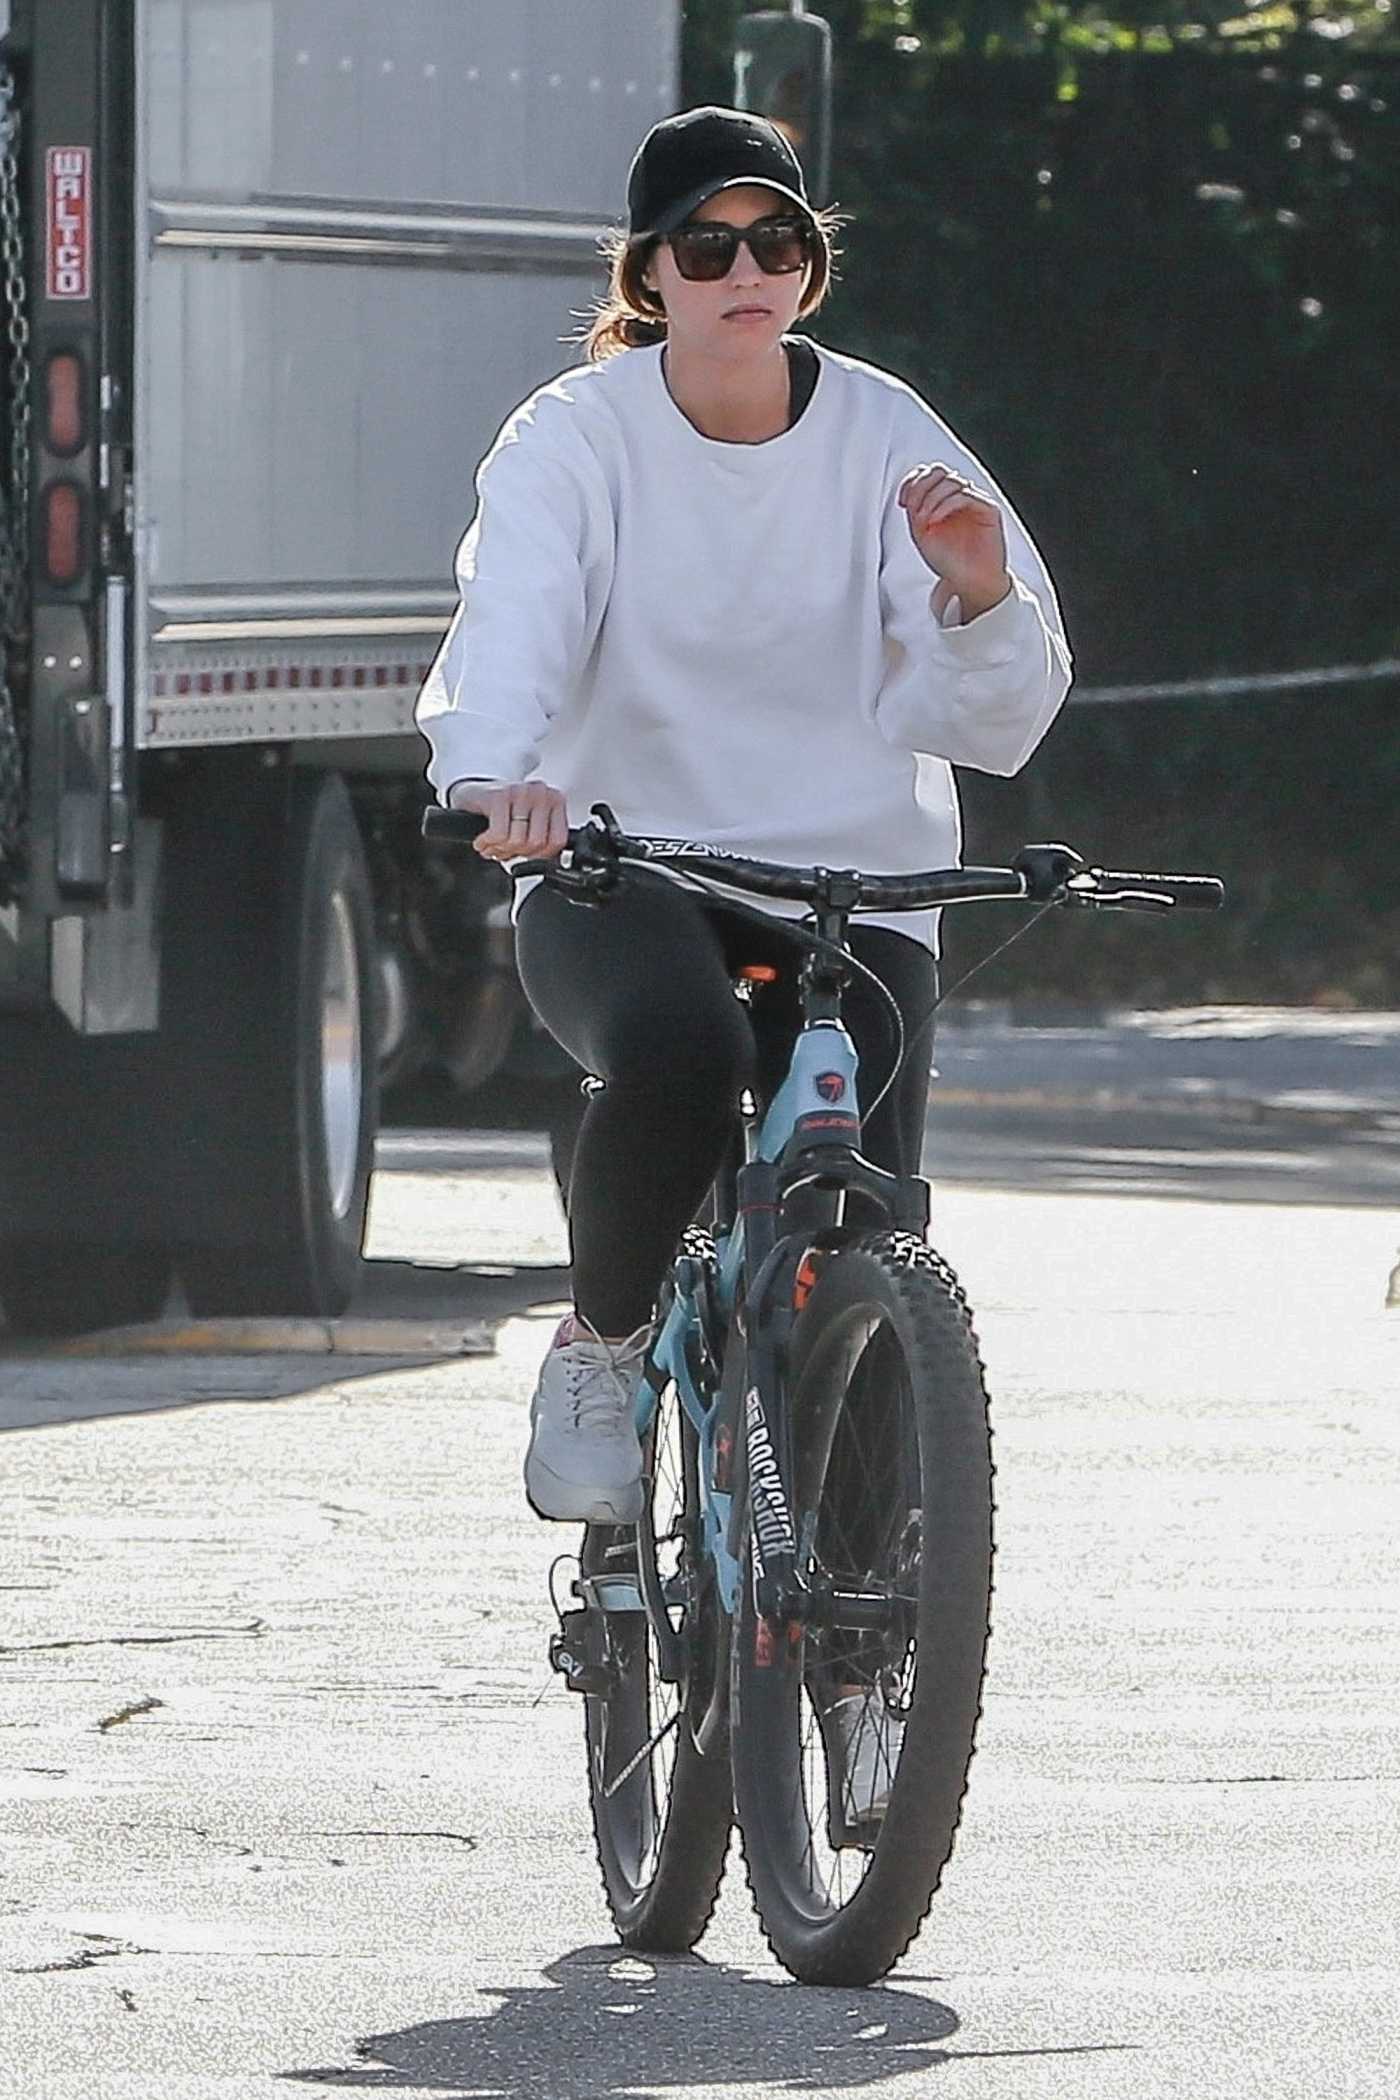 Christina Schwarzenegger Enjoys a Bike Ride with Her Father Arnold Schwarzenegger in Brentwood 06/15/2020